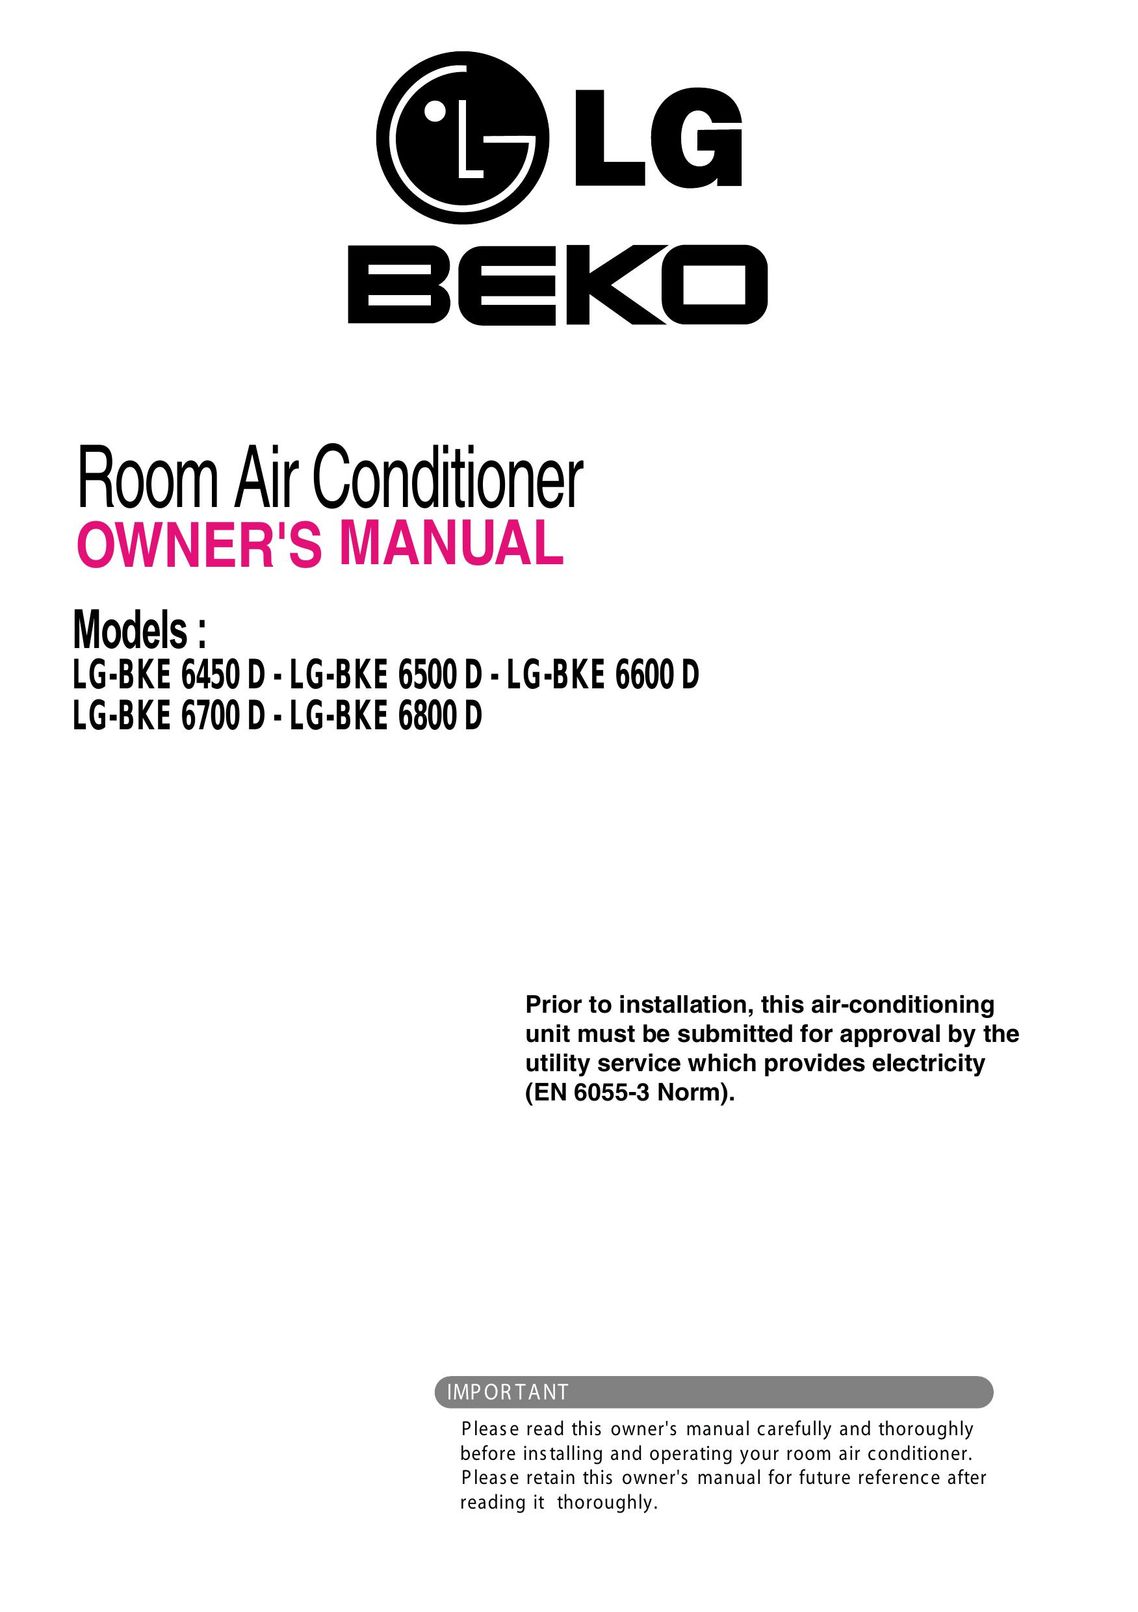 Beko LG-BKE 6700 D, LG-BKE 6800 D Air Conditioner User Manual